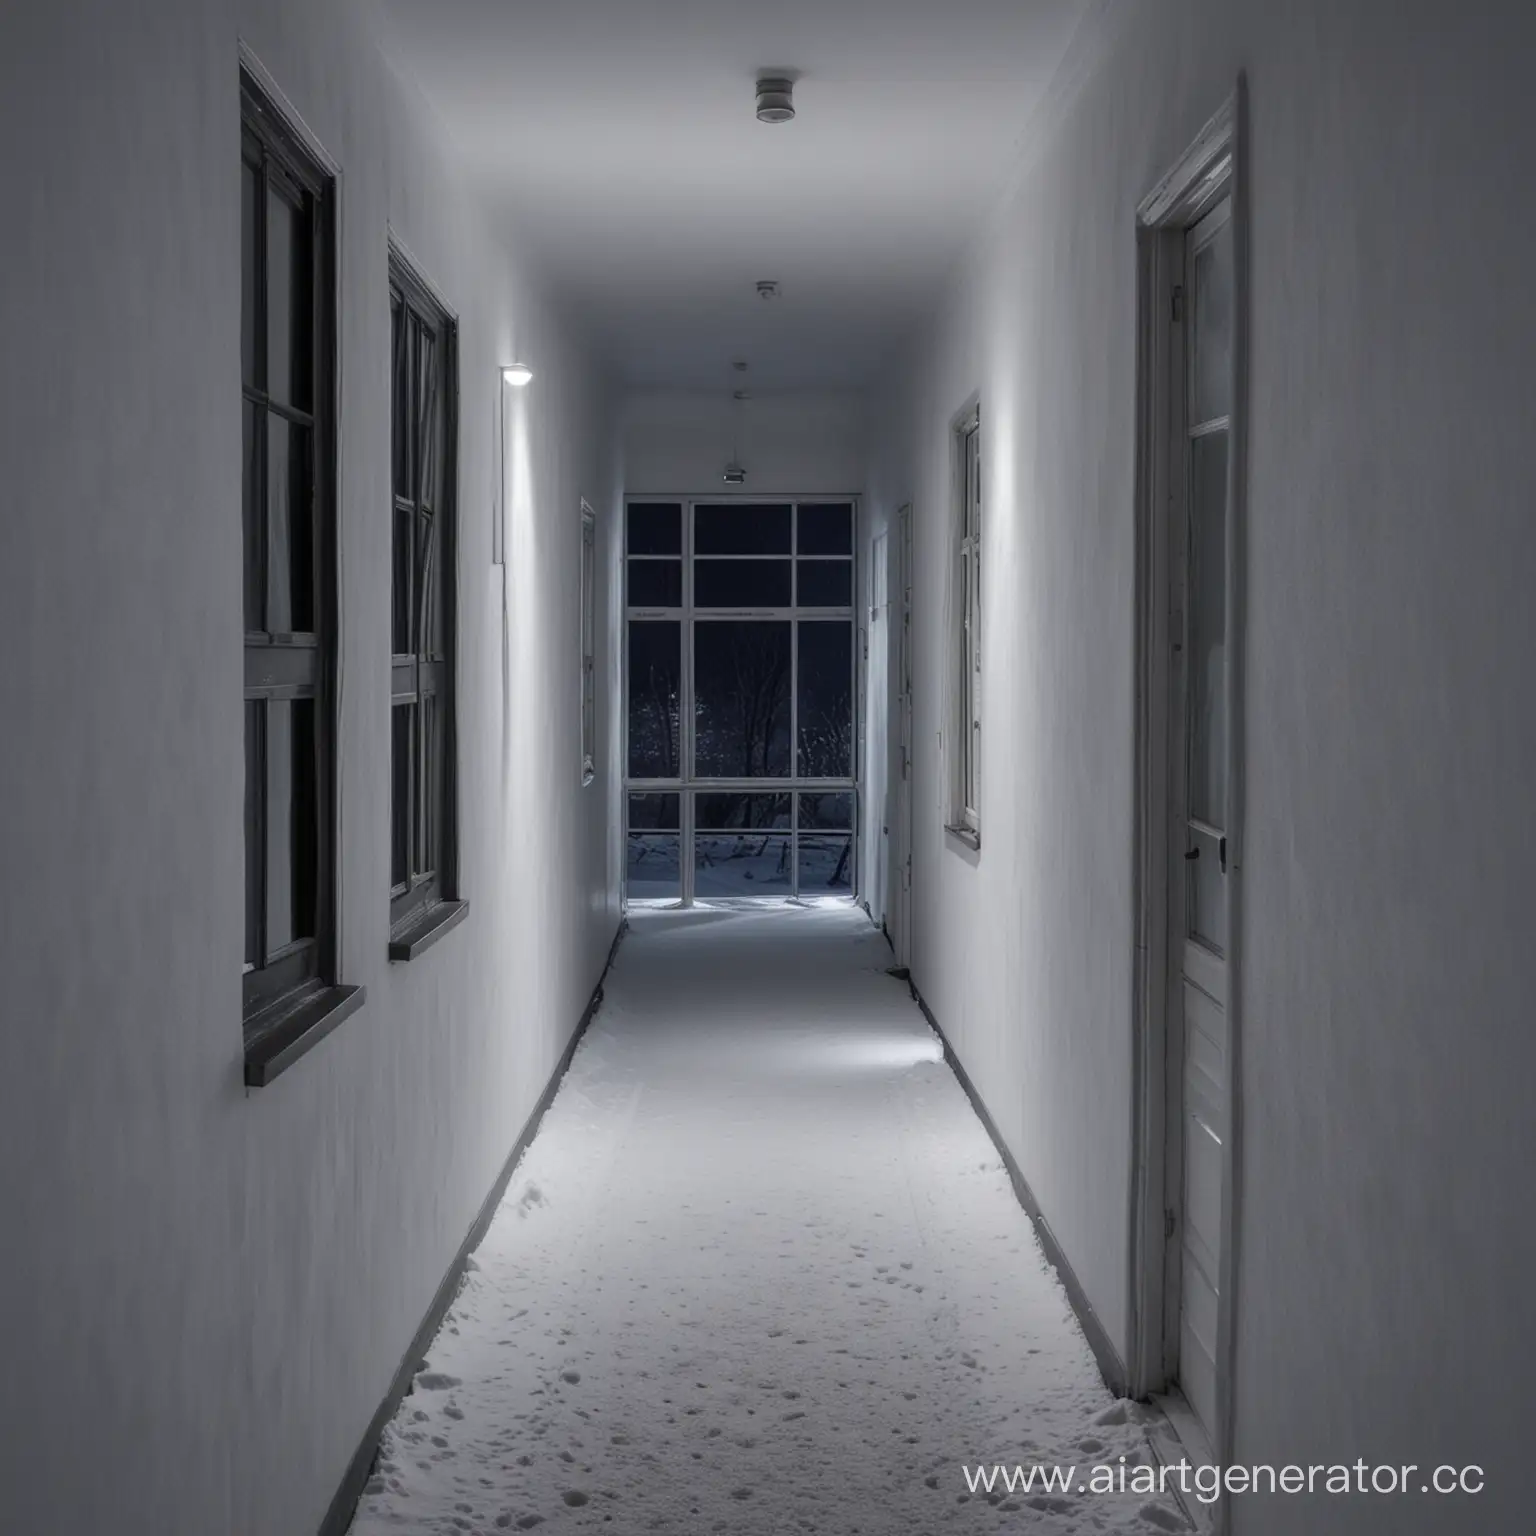 Corridor, Window, Night, Winter